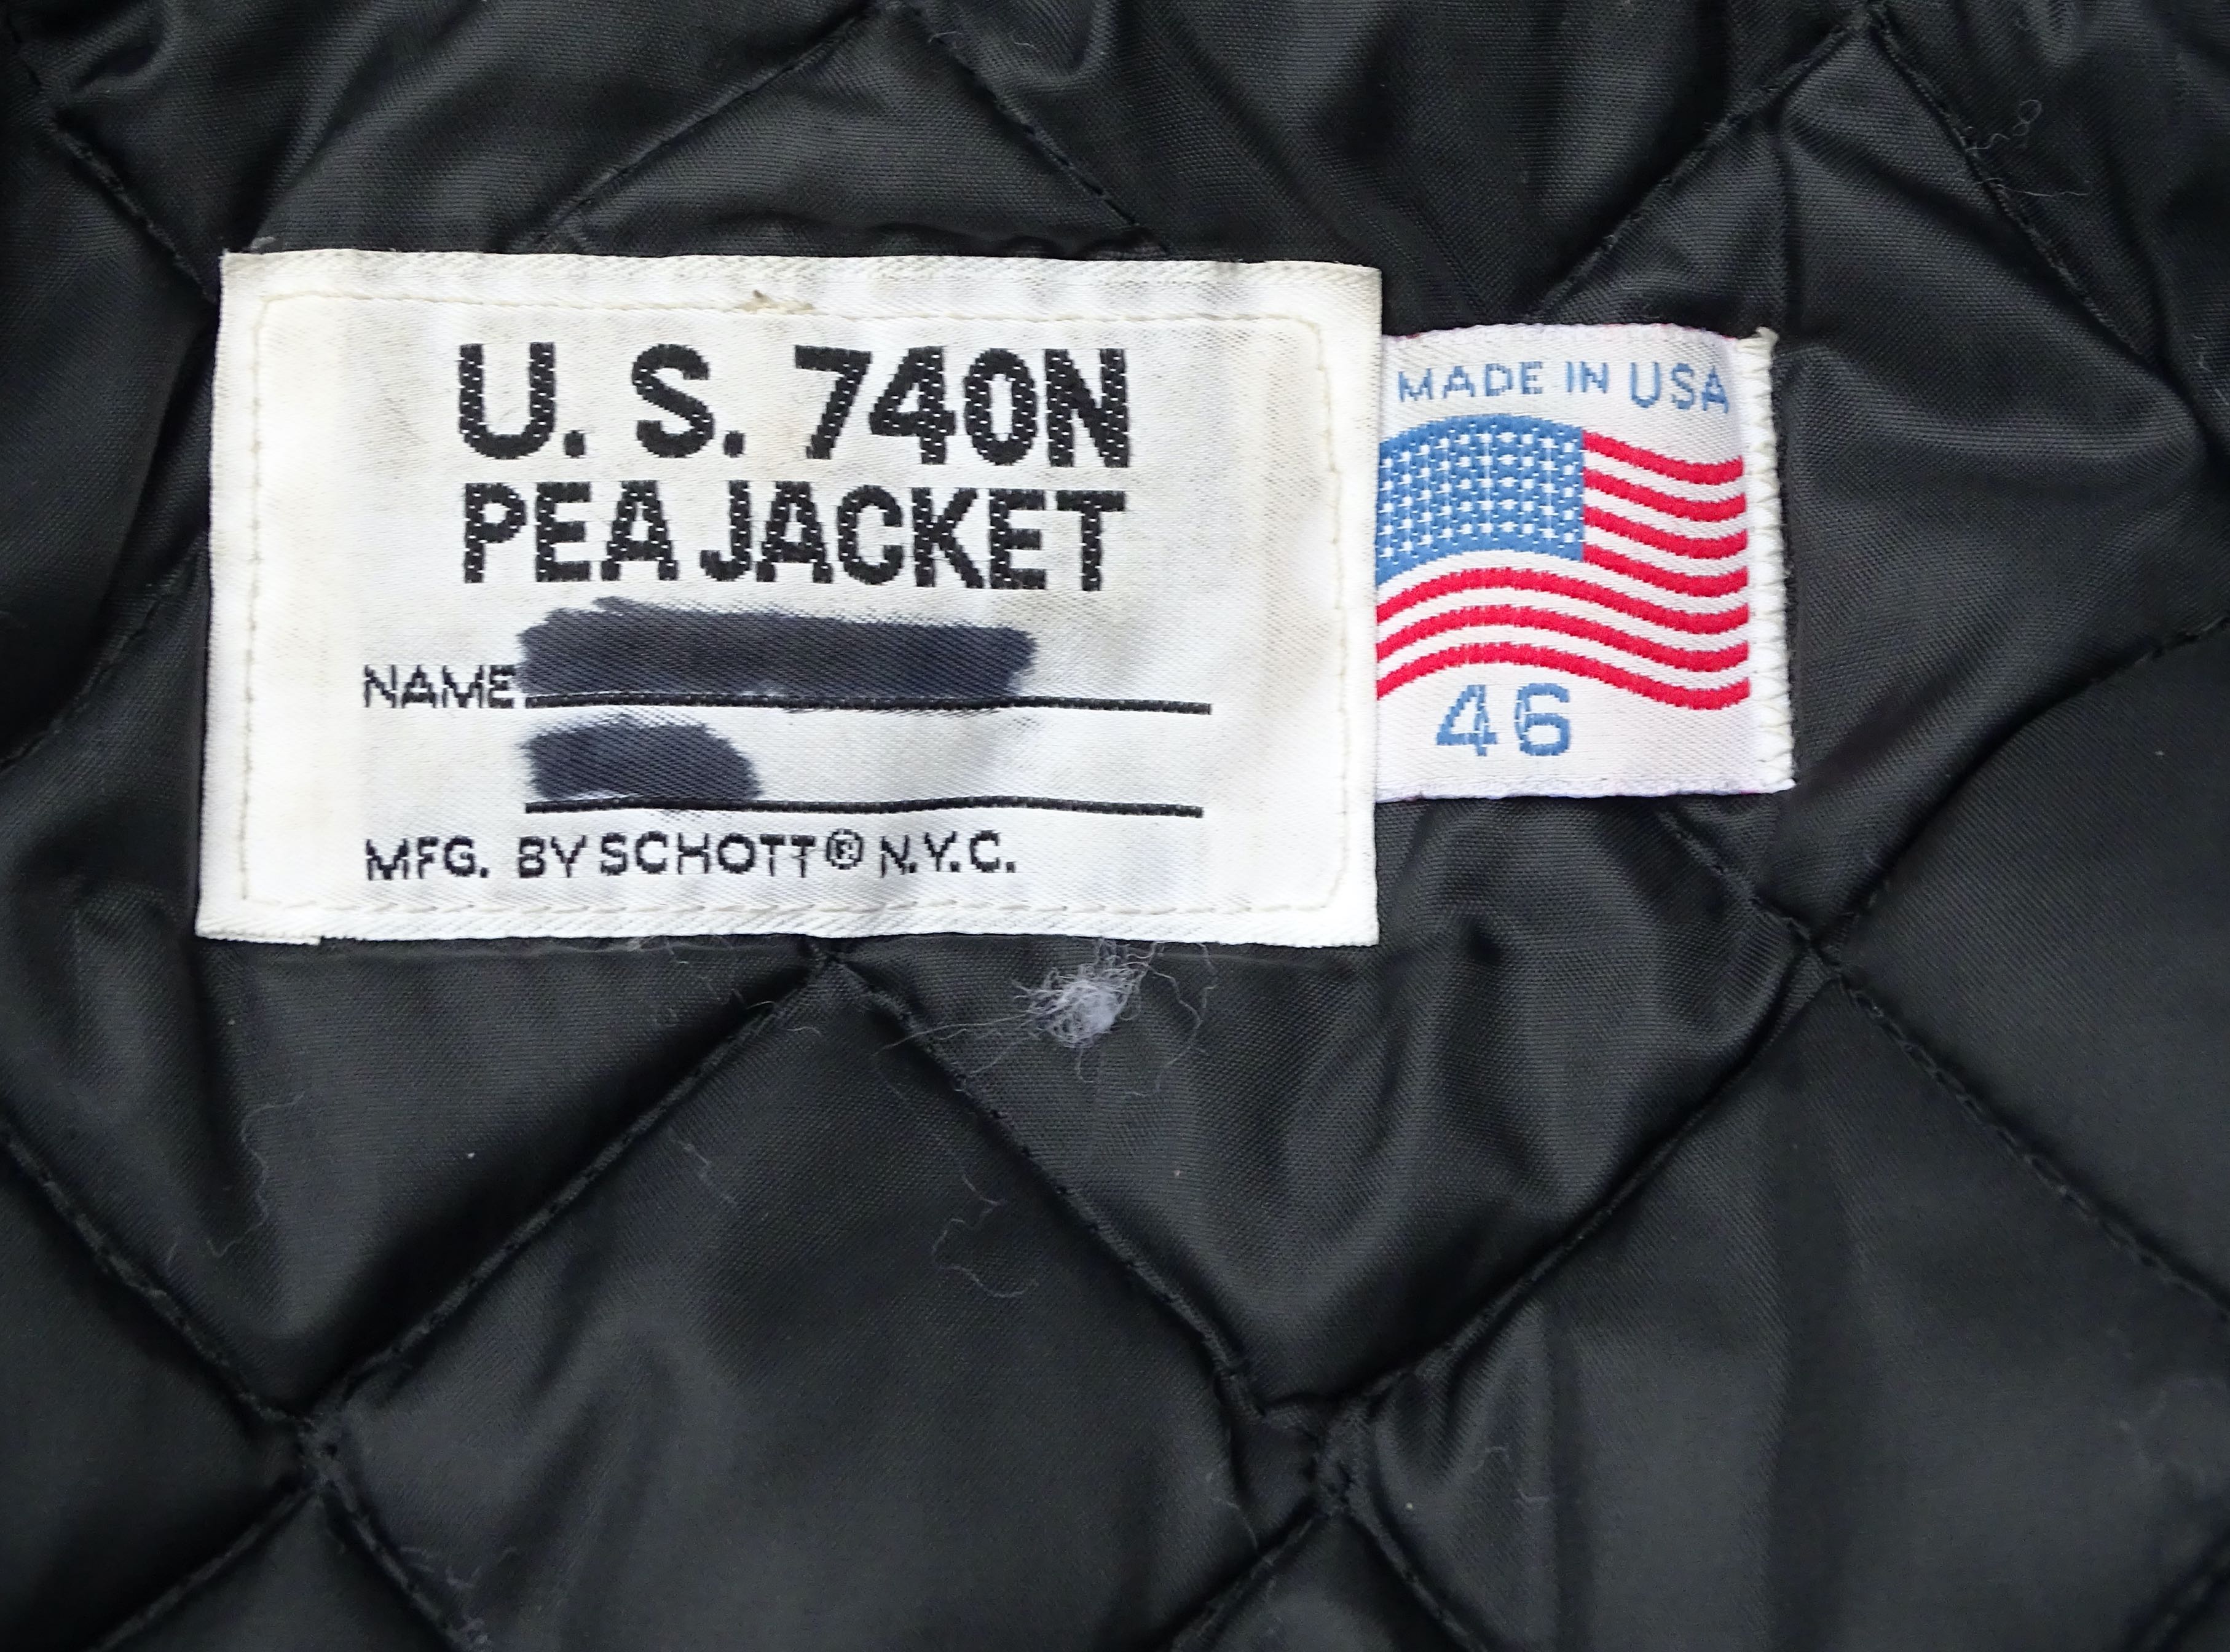 Pea jacket Schott 740 N  Caban en cuir noir